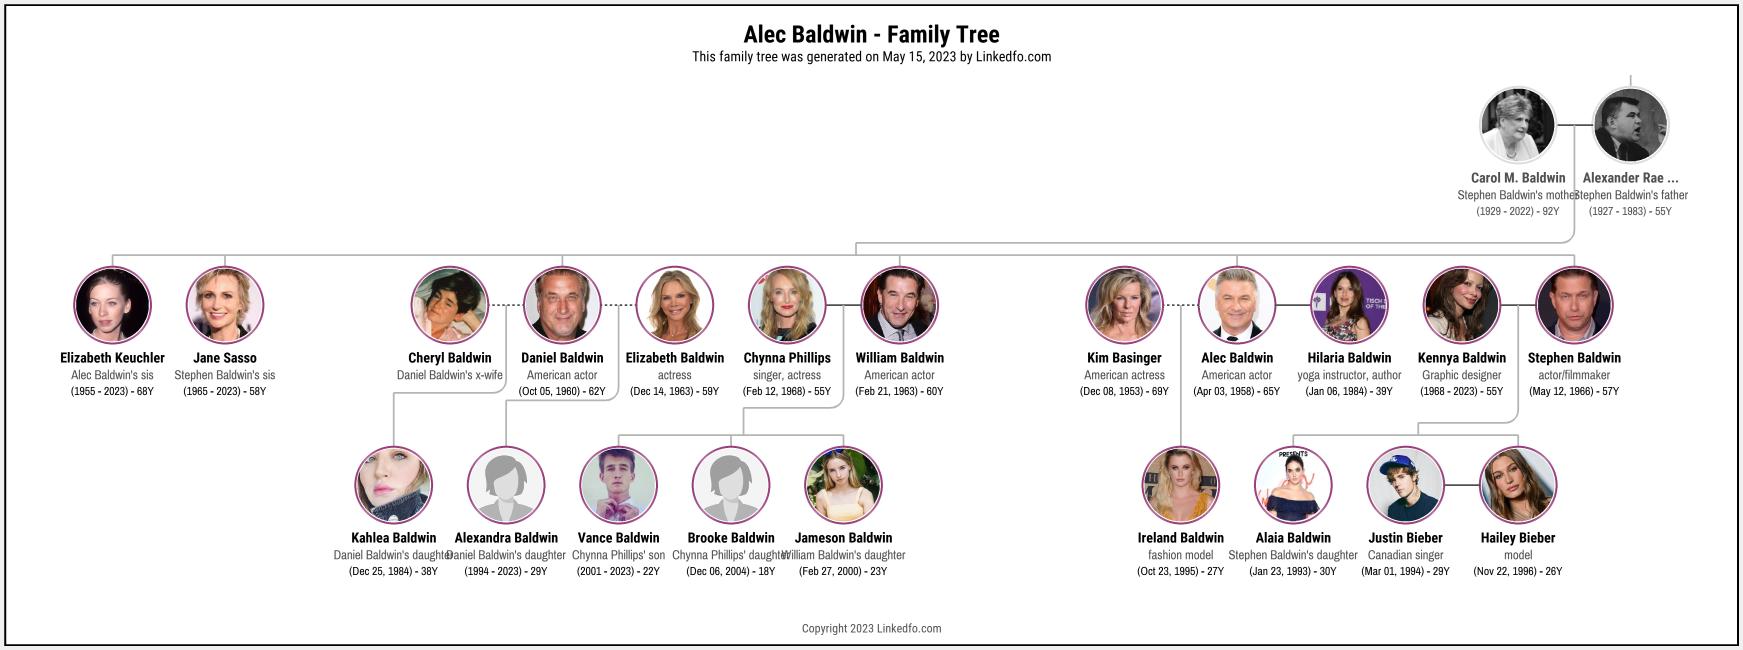 Alec Baldwin's Family Tree